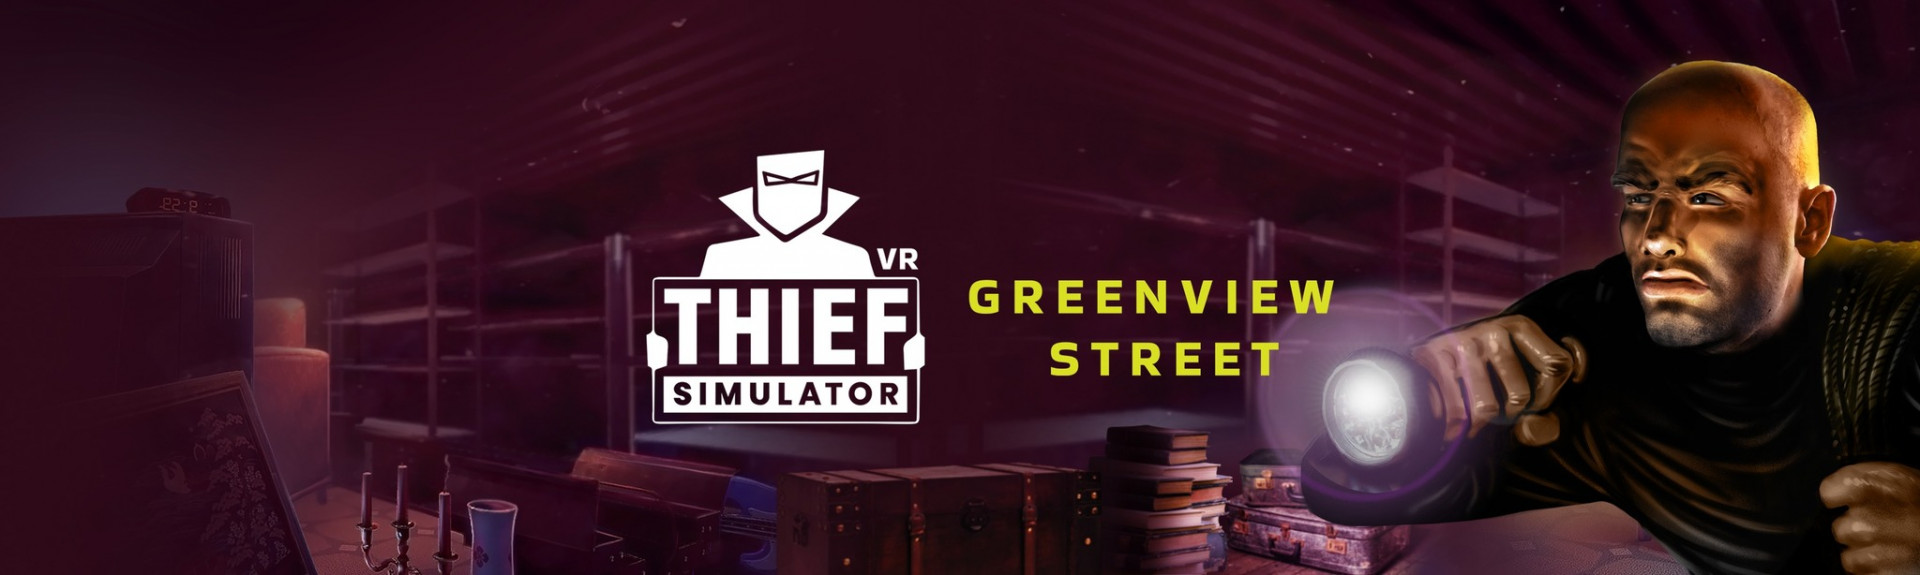 Thief Simulator VR: Greenview Street - ANÁLISIS